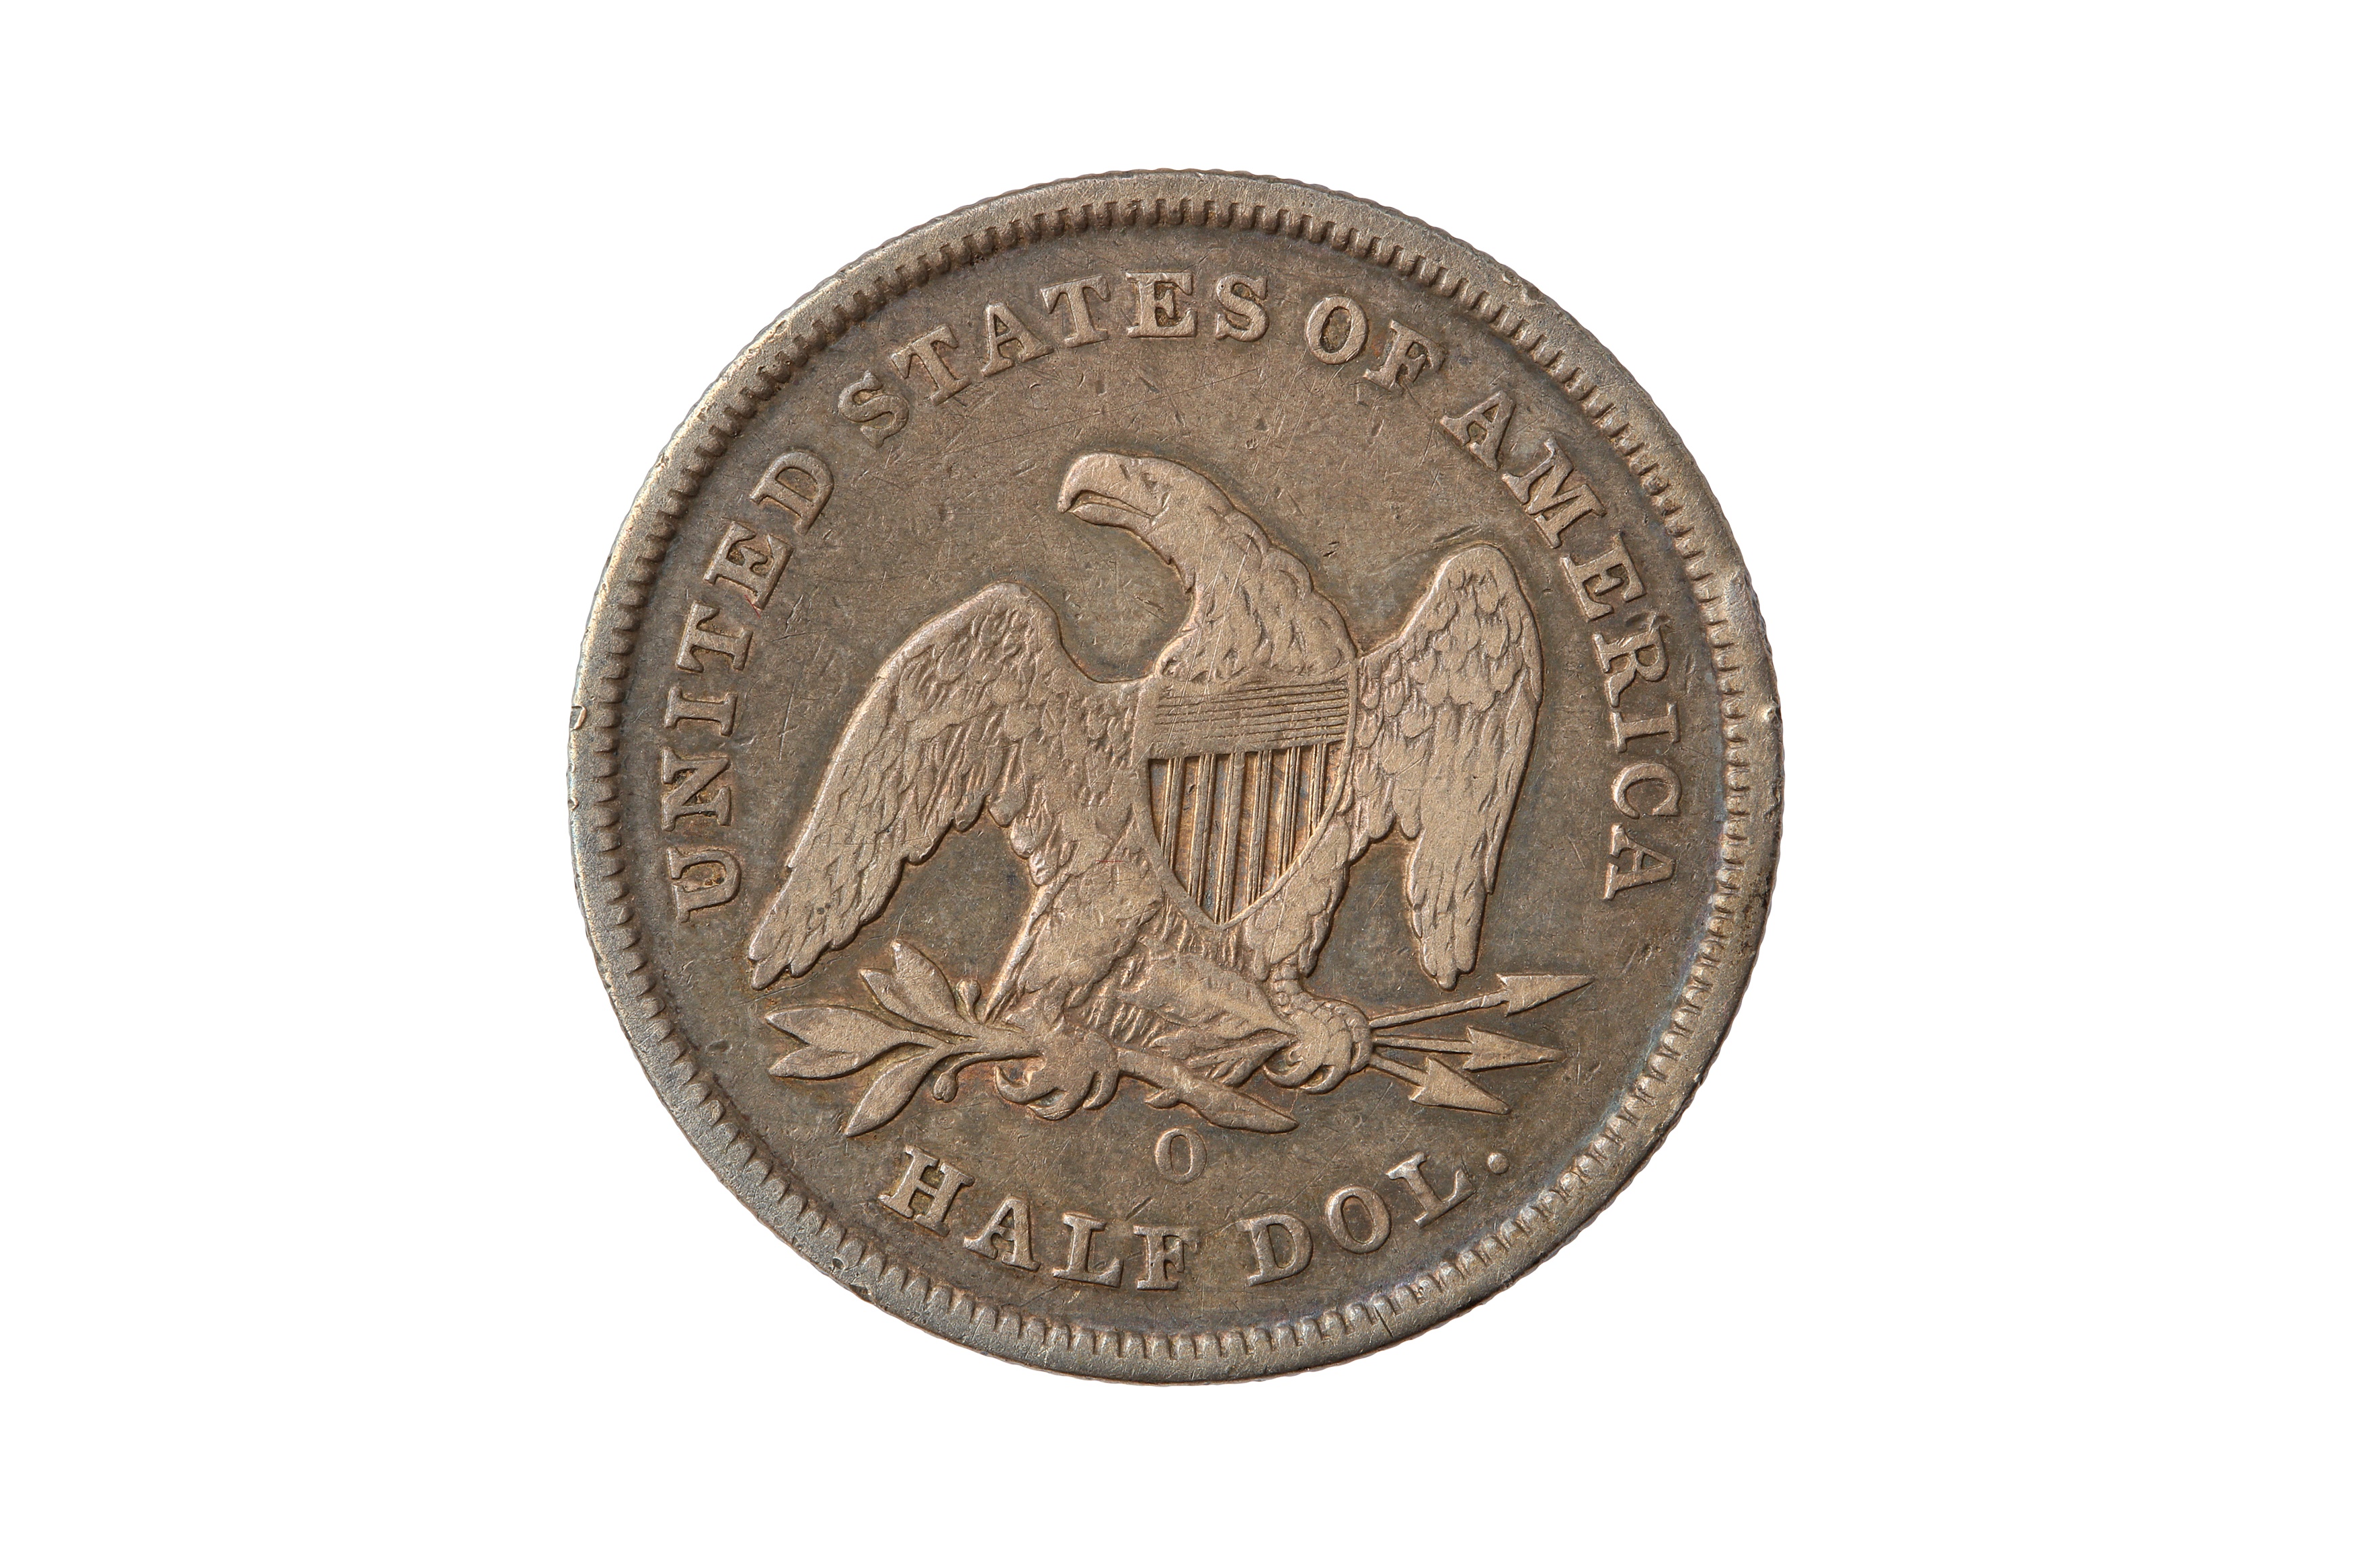 USA, 1840 50 CENTS/HALF DOLLAR. - Image 2 of 2